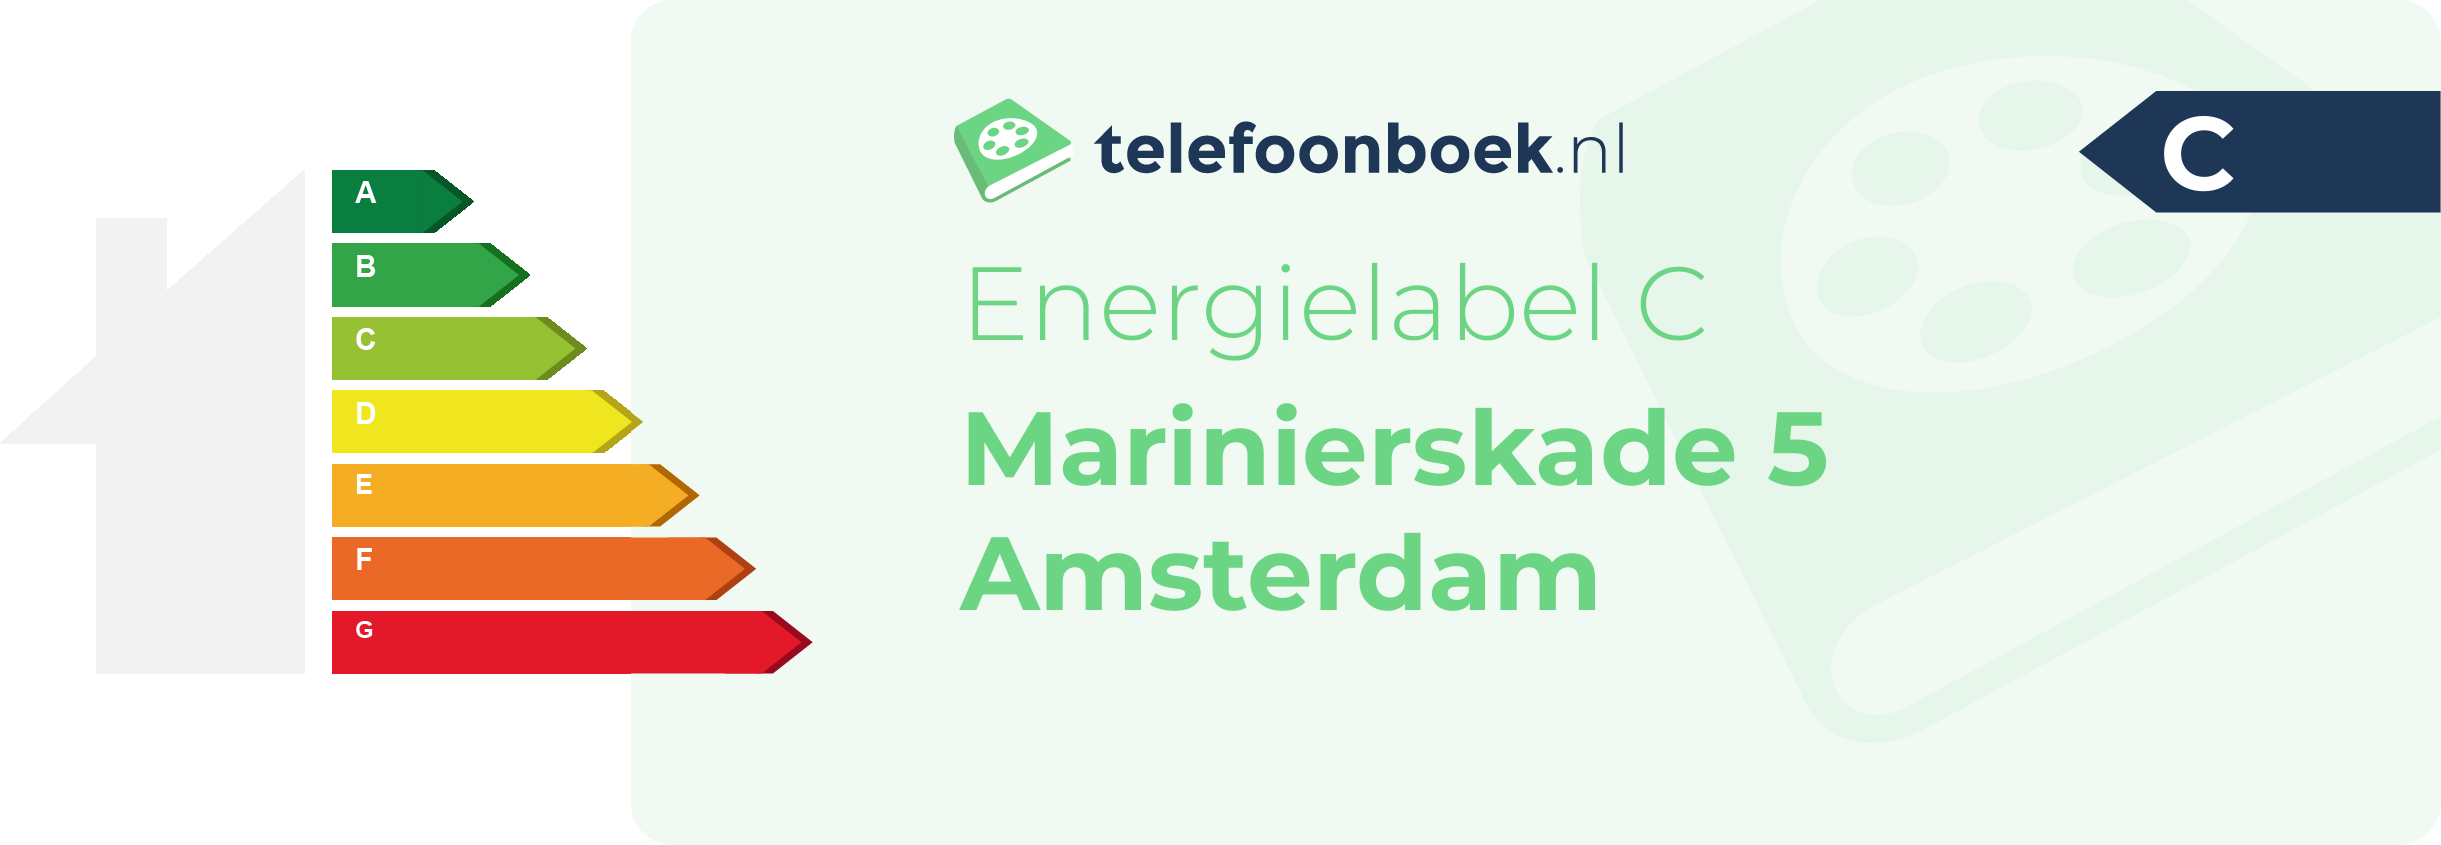 Energielabel Marinierskade 5 Amsterdam